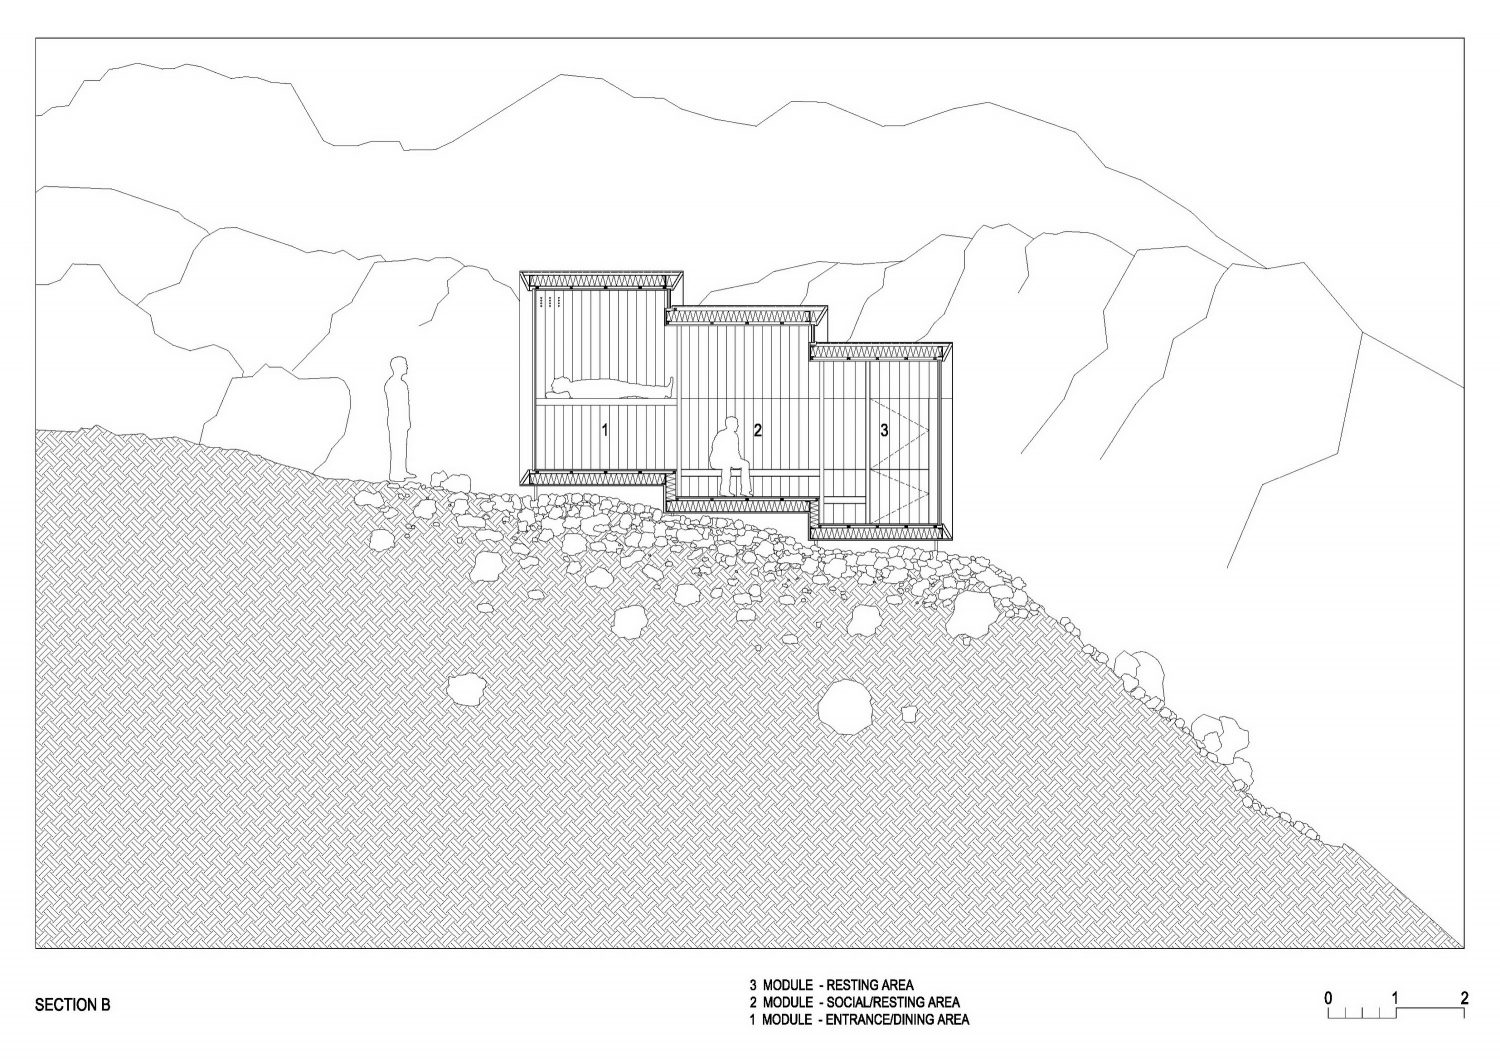 Alpine Shelter Skuta by OFIS Architects, AKT II, and Harvard GSD Students